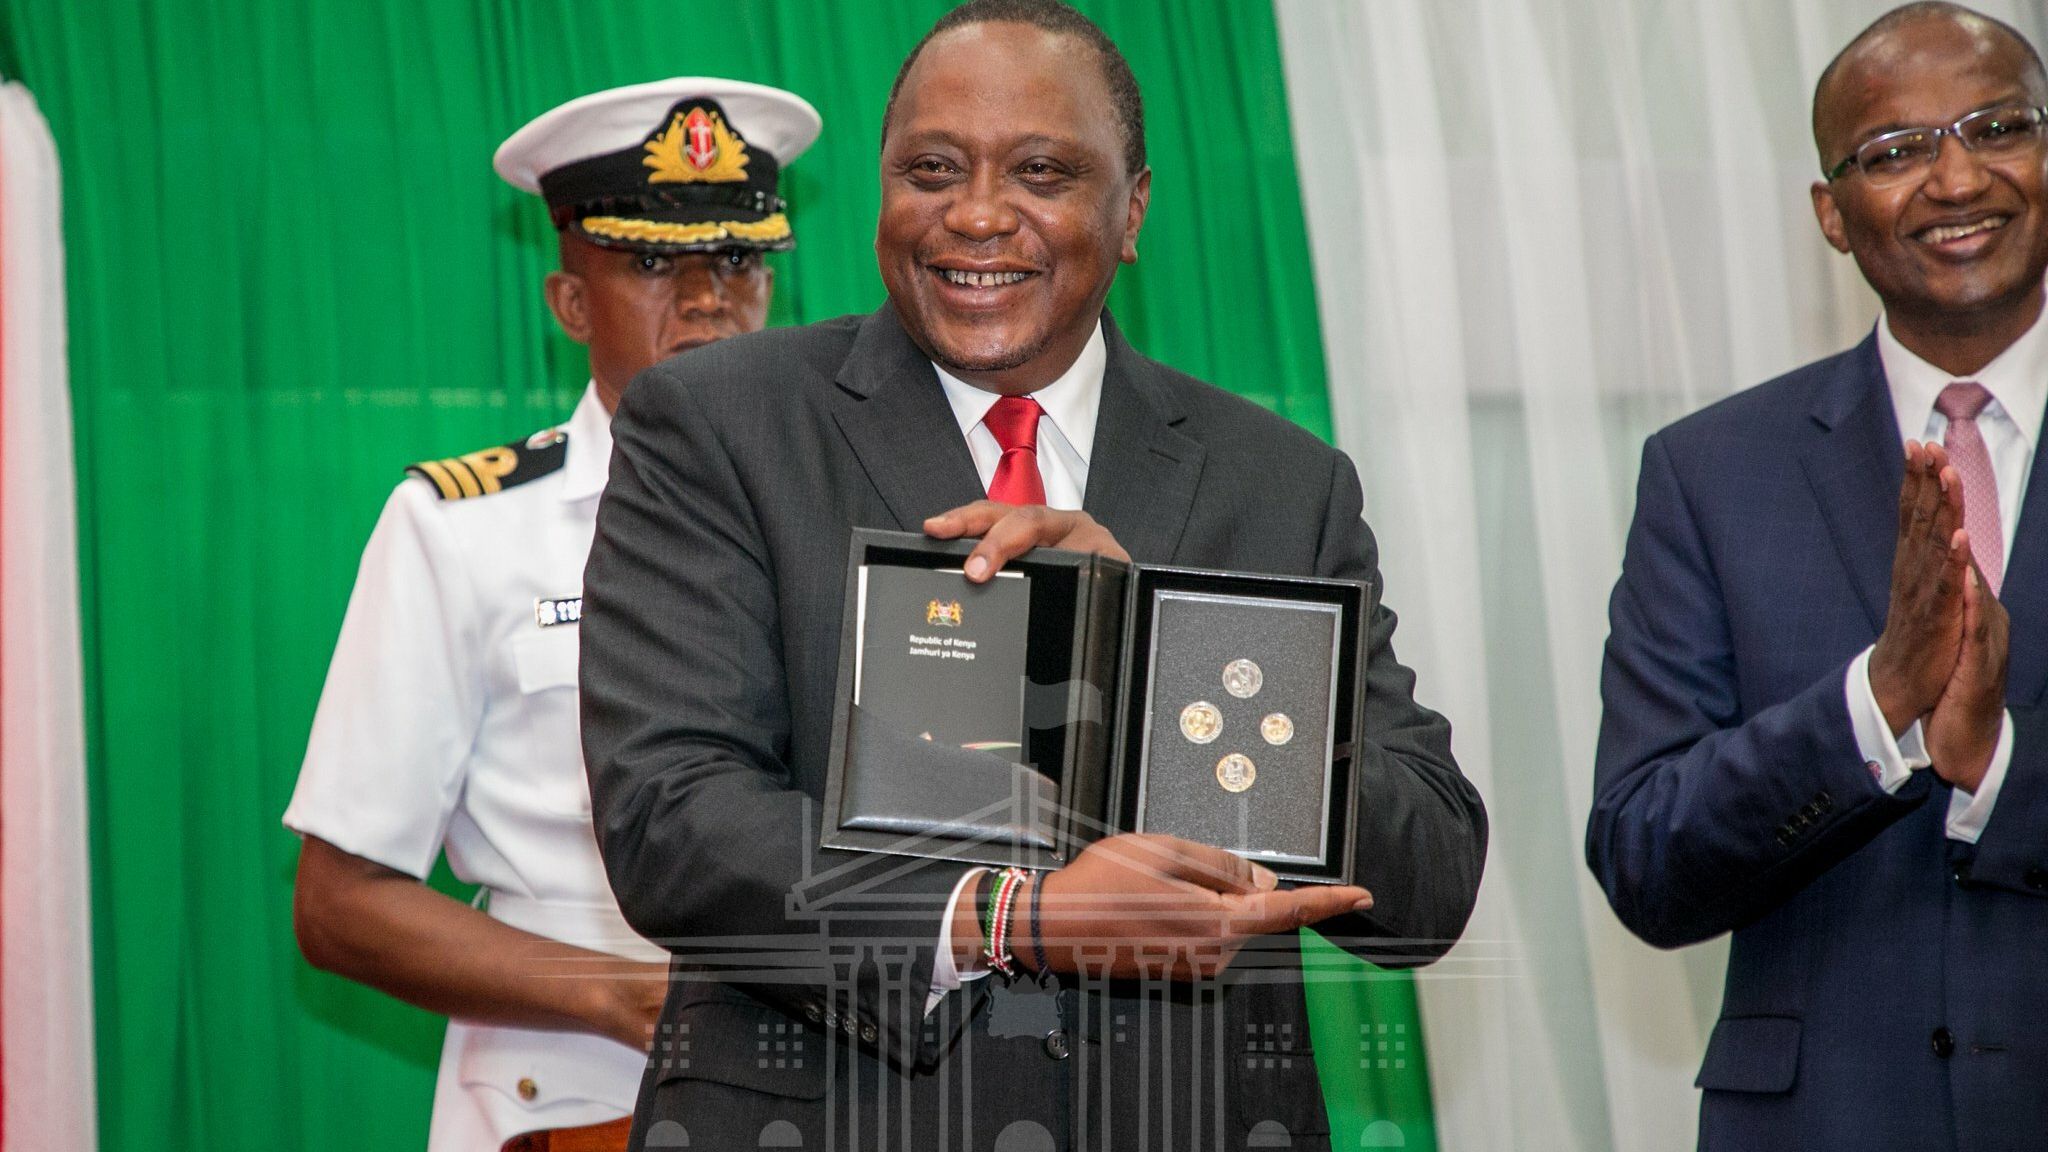 Kenya's President Uhuru Kenyatta unveils the county's new currency coins in Nairobi's capital on December 11, 2018.